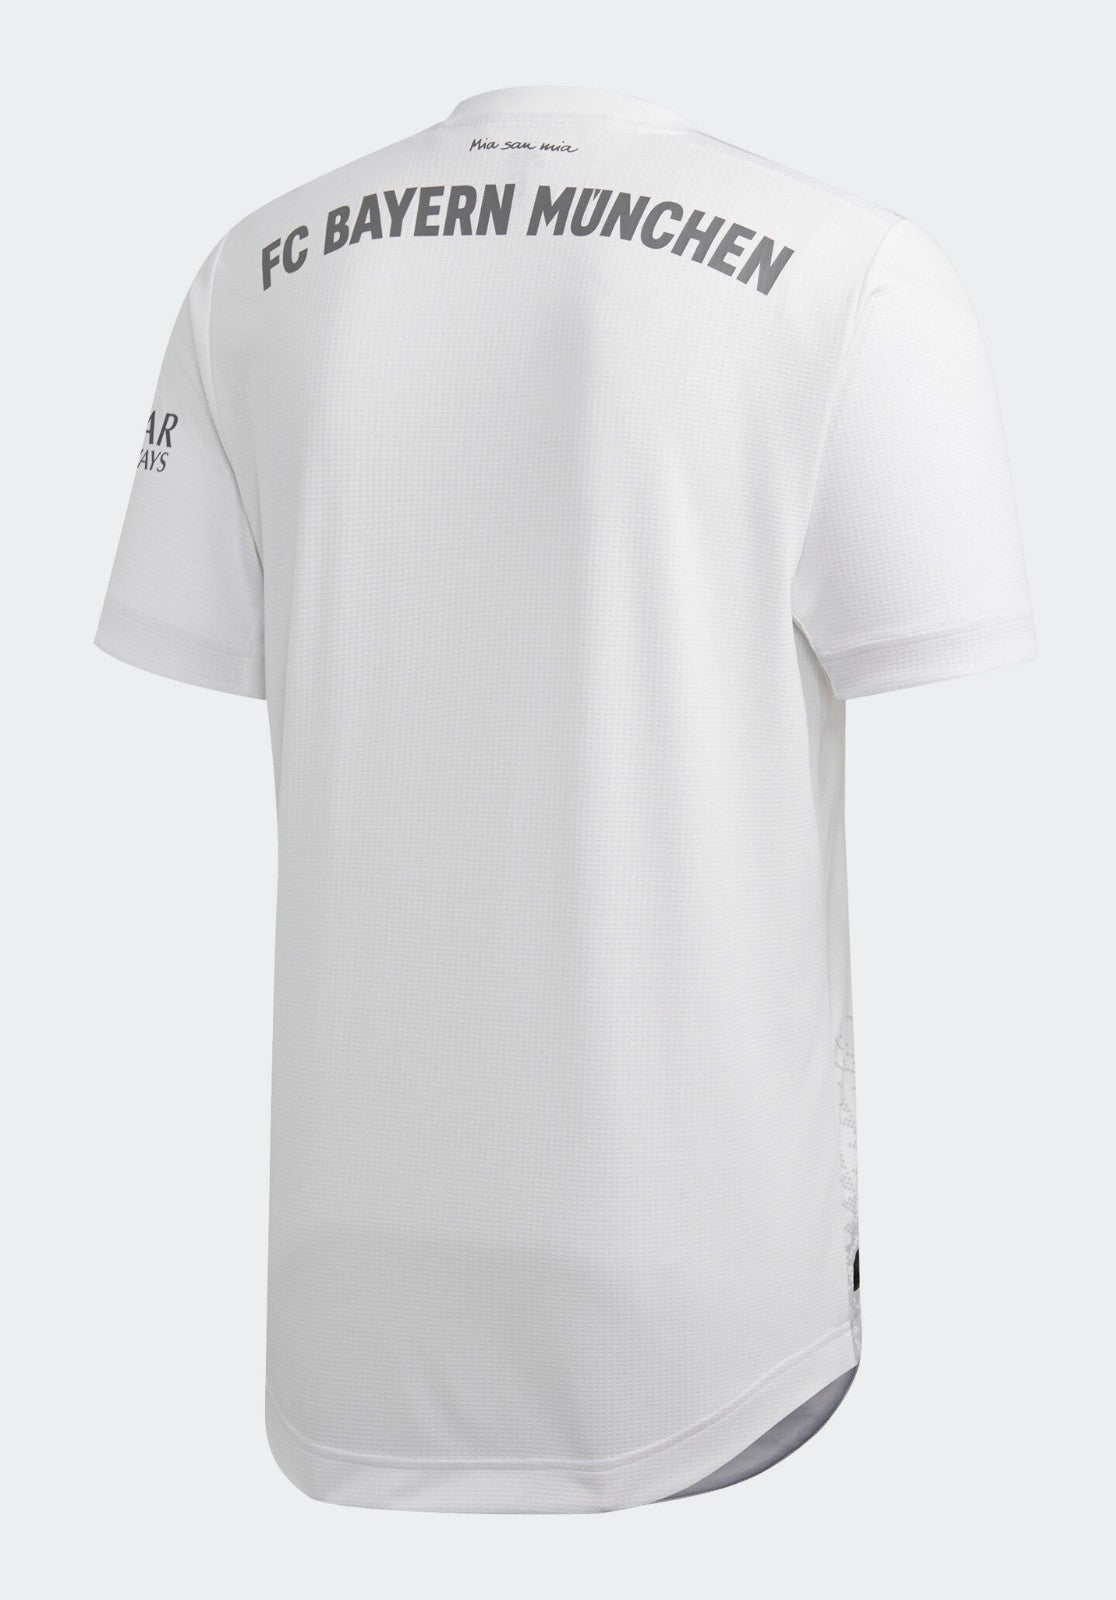 Camisa Bayern de Munique Retrô Away 2019/20 Torcedor Adidas Masculina - Branca